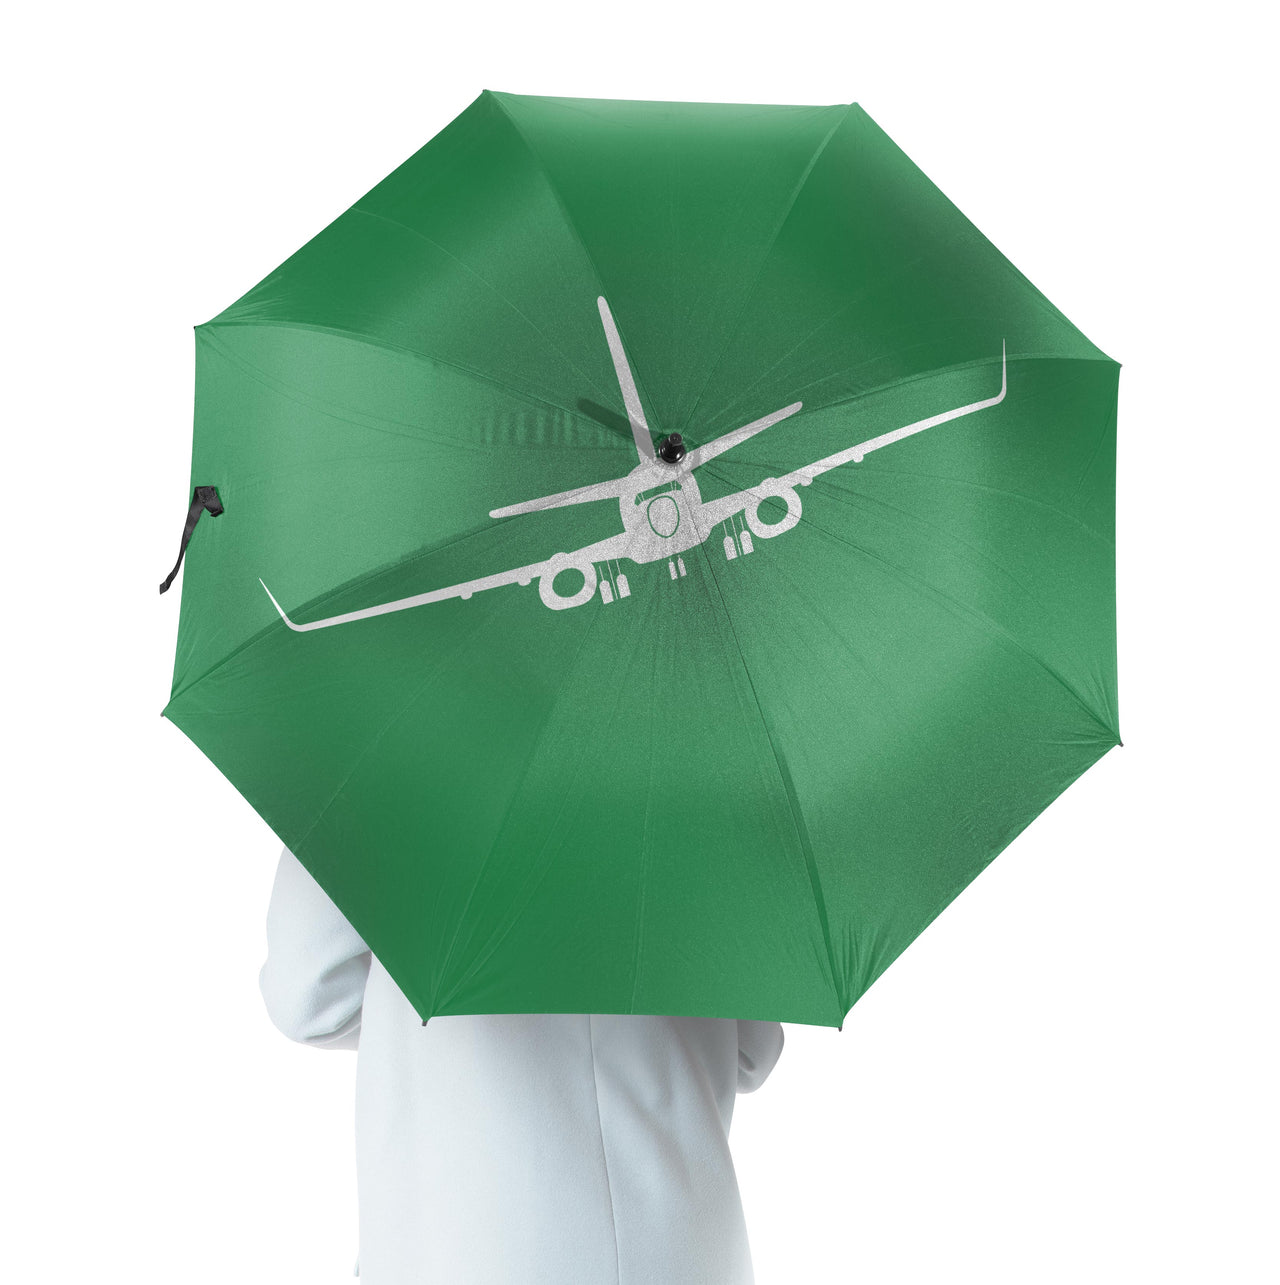 Boeing 737-800NG Silhouette Designed Umbrella